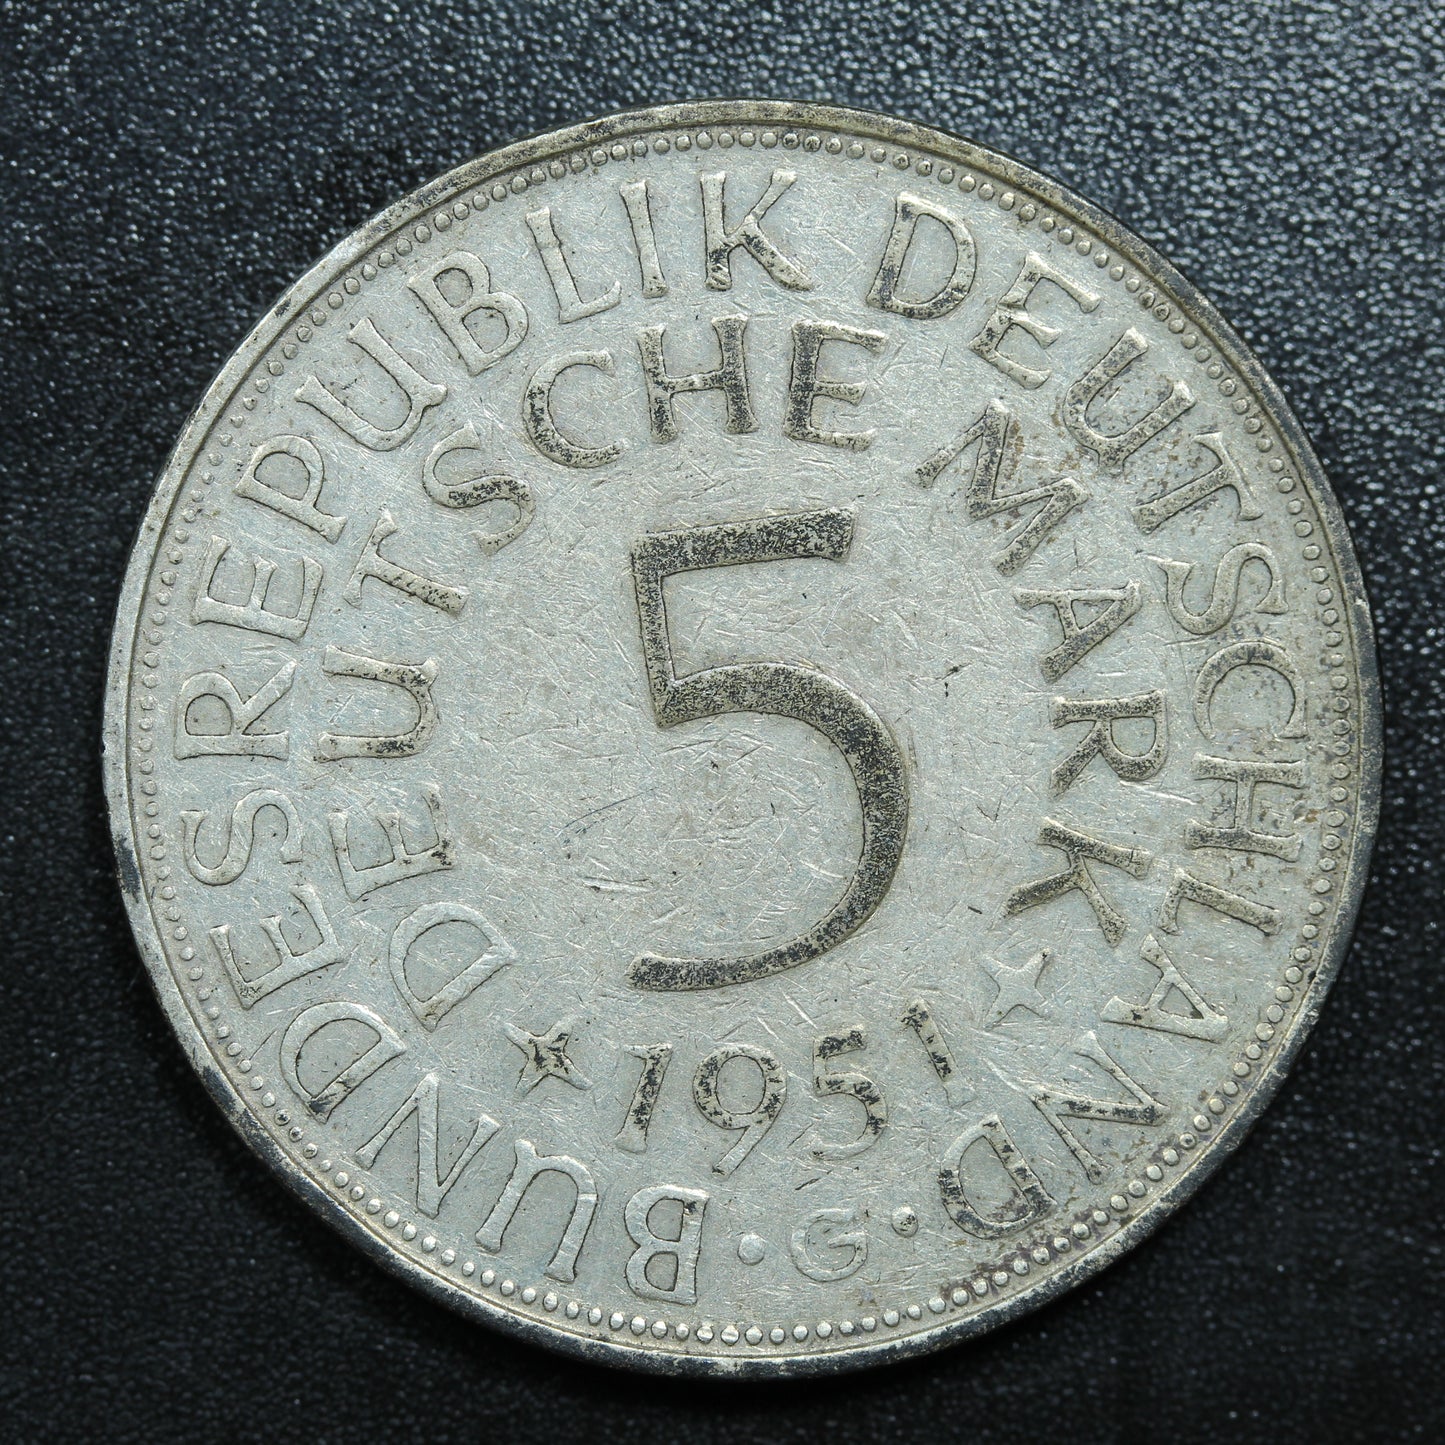 1951 G German 5 Funf Mark Silver Coin - KM# 112